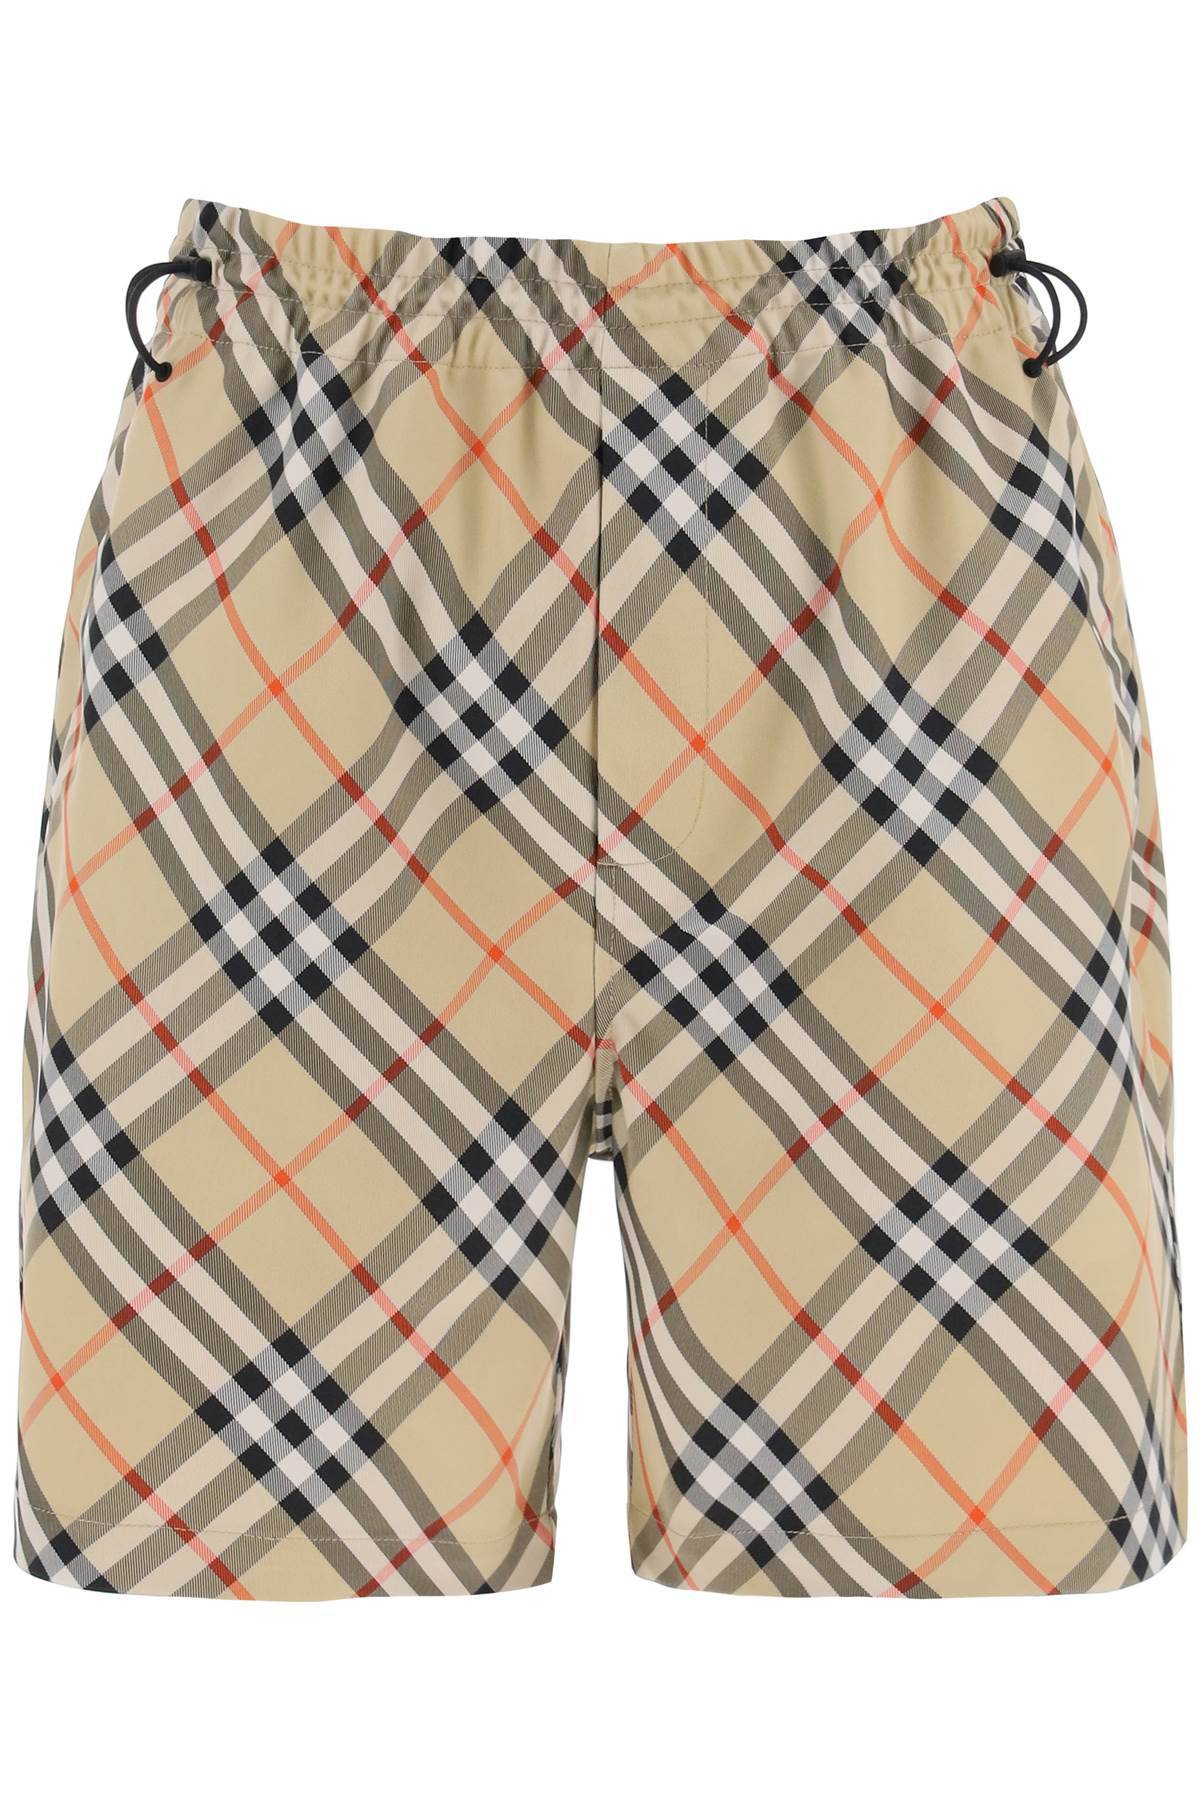 Burberry BURBERRY checkered bermuda shorts